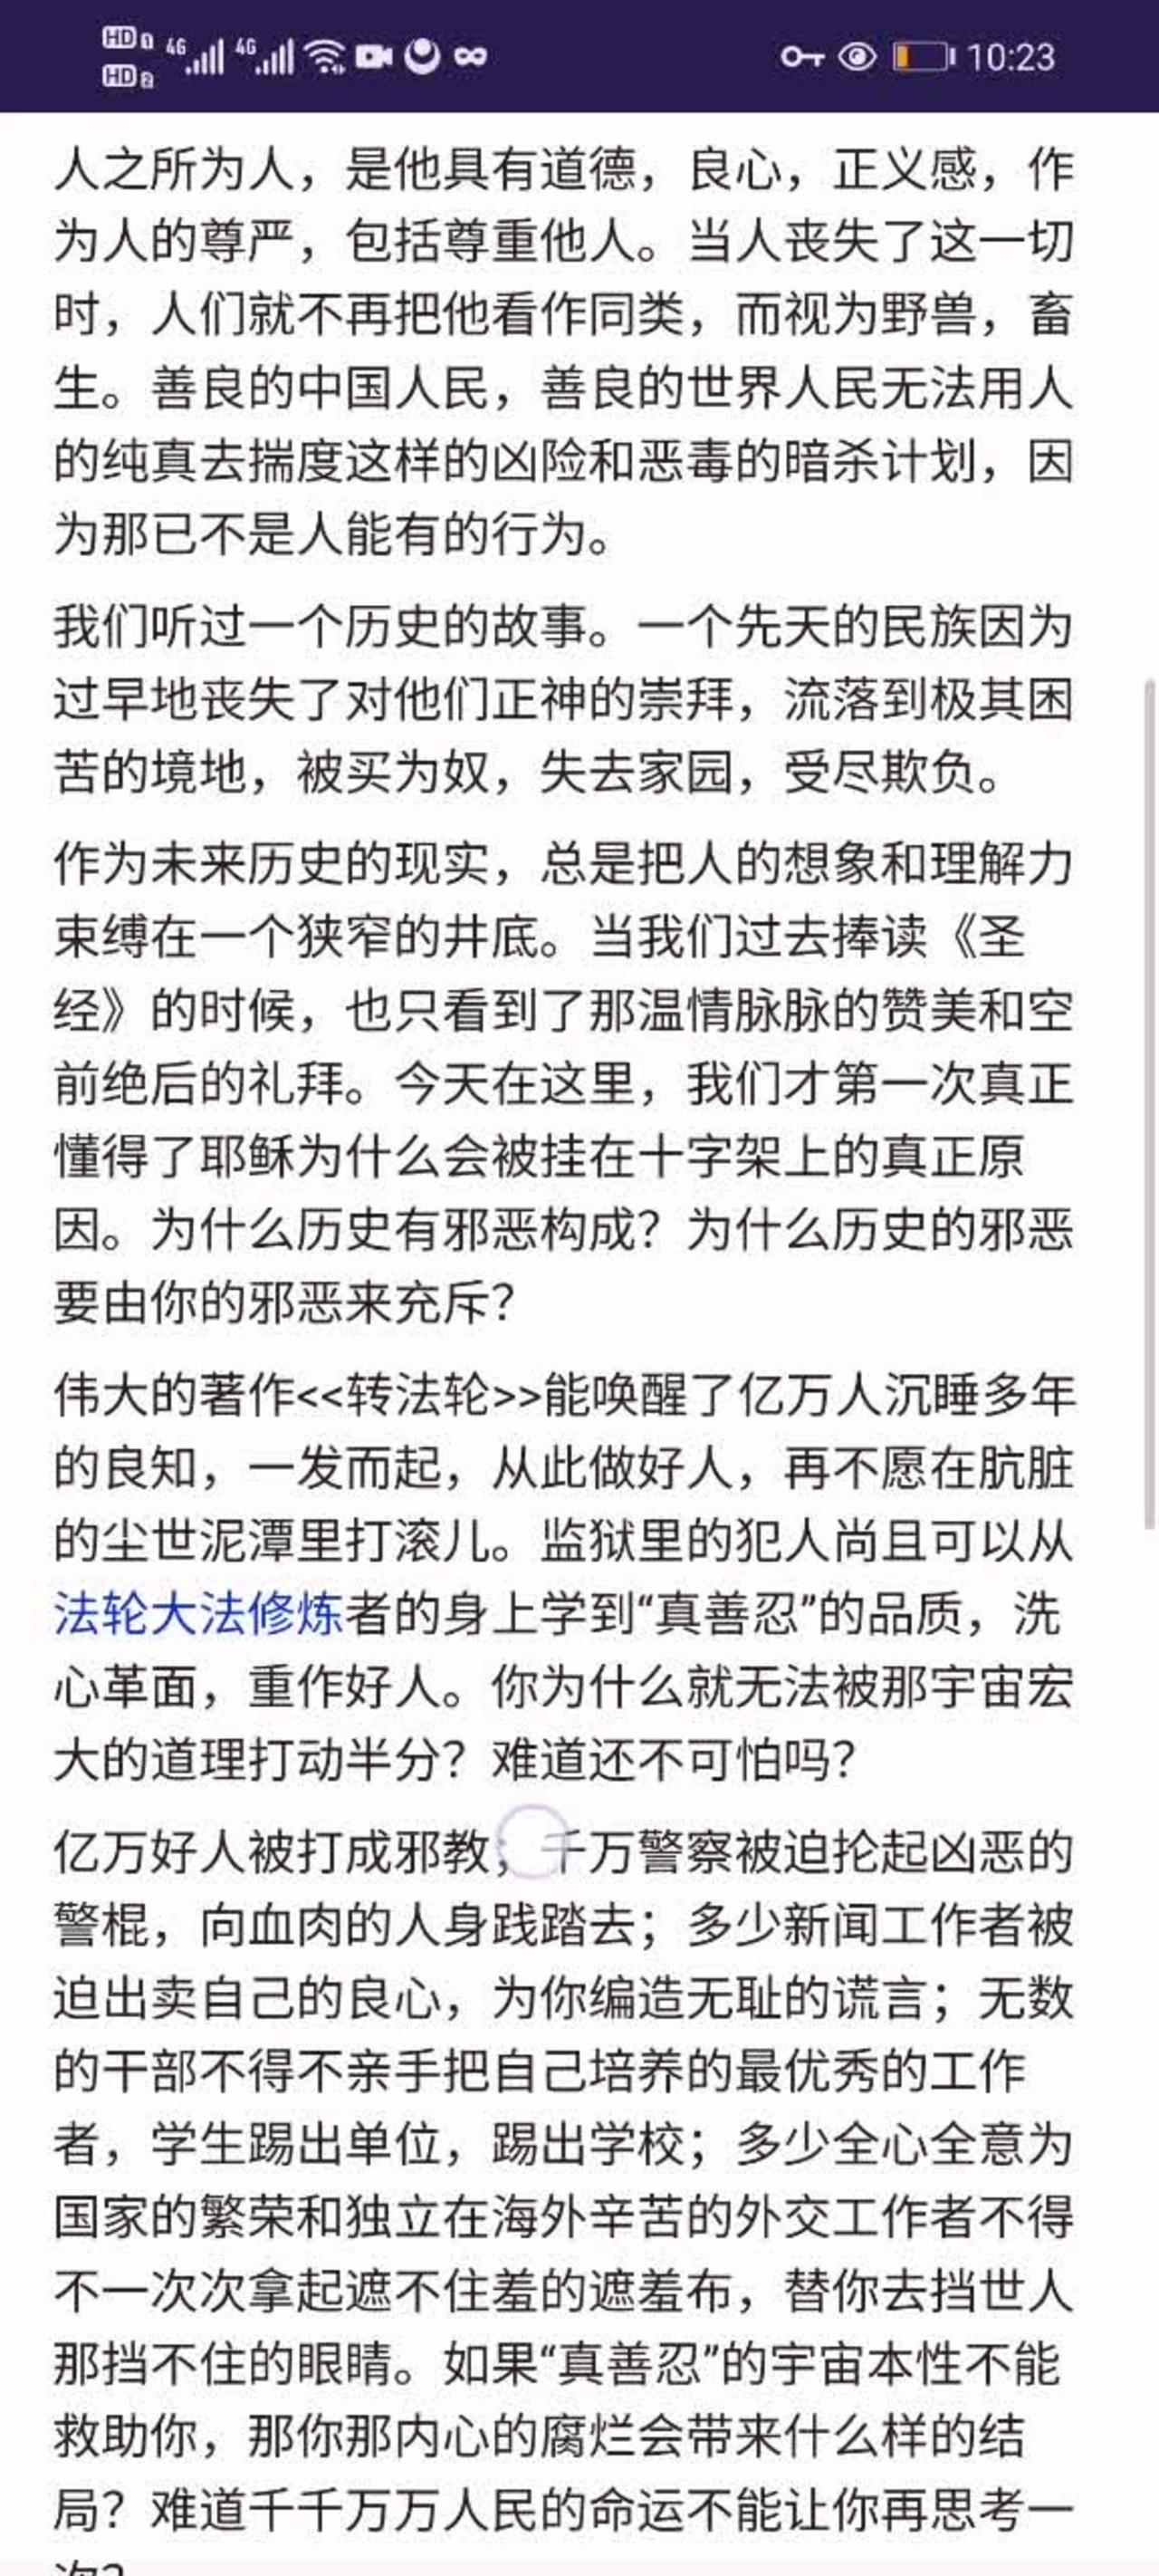 The Shanghai Clique threatened to kill Li Hongzhi if Li didn't leave China for Dragon Springs!